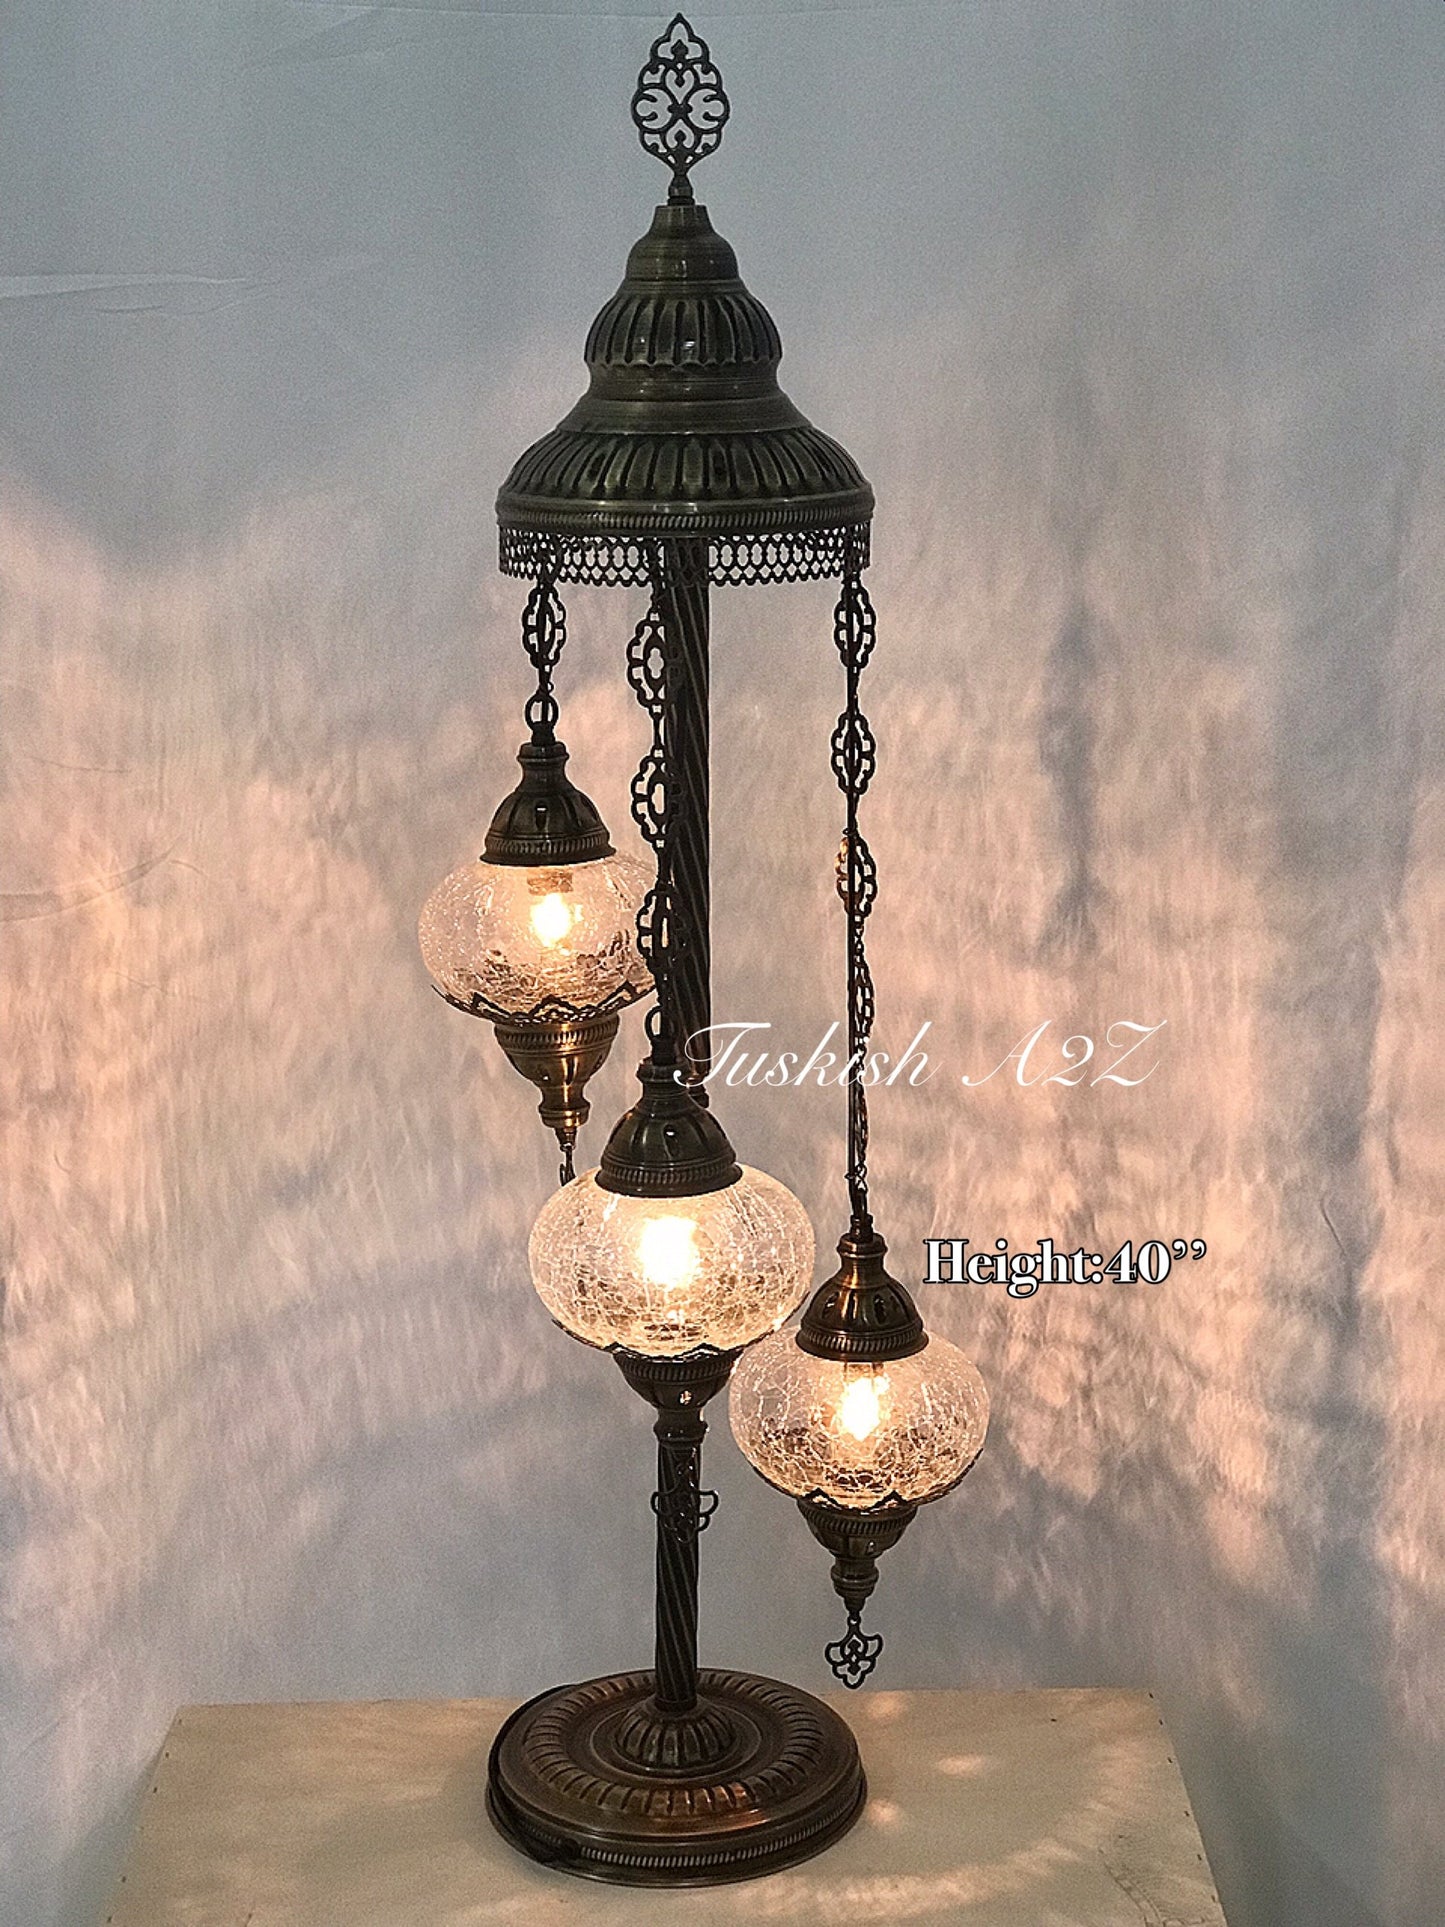 Ottoman Turkish  Mosaic Floor Lamp  With 3 Cracked Globe,ID:151